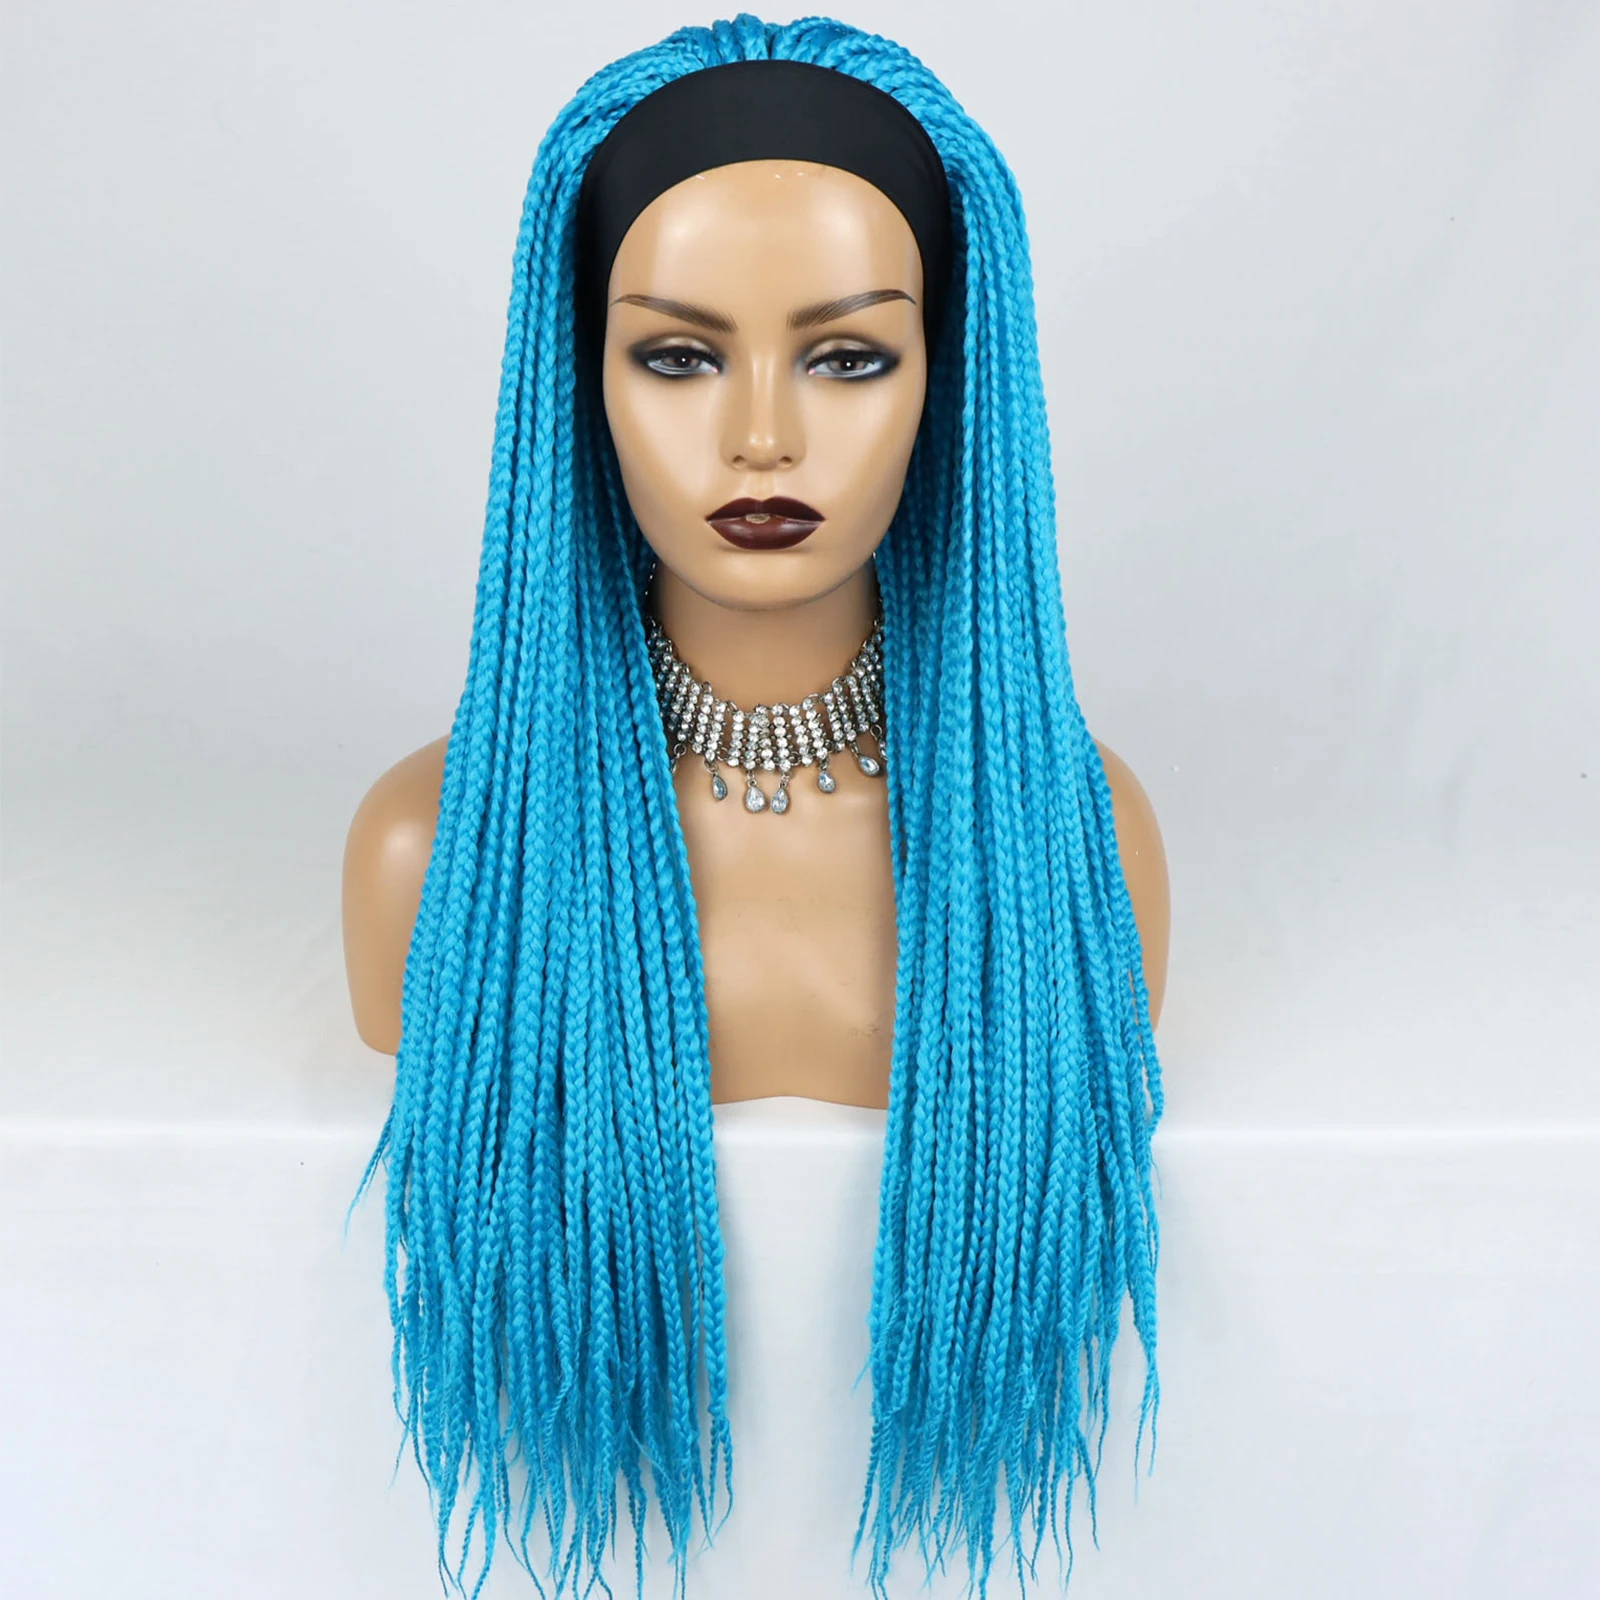 Peluca sintética con diadema de Color azul para mujer negra, pelo largo de 26 pulgadas, peluca trenzada de Caja francesa, peluca trenzada de pelo de ganchillo, banda para el cabello